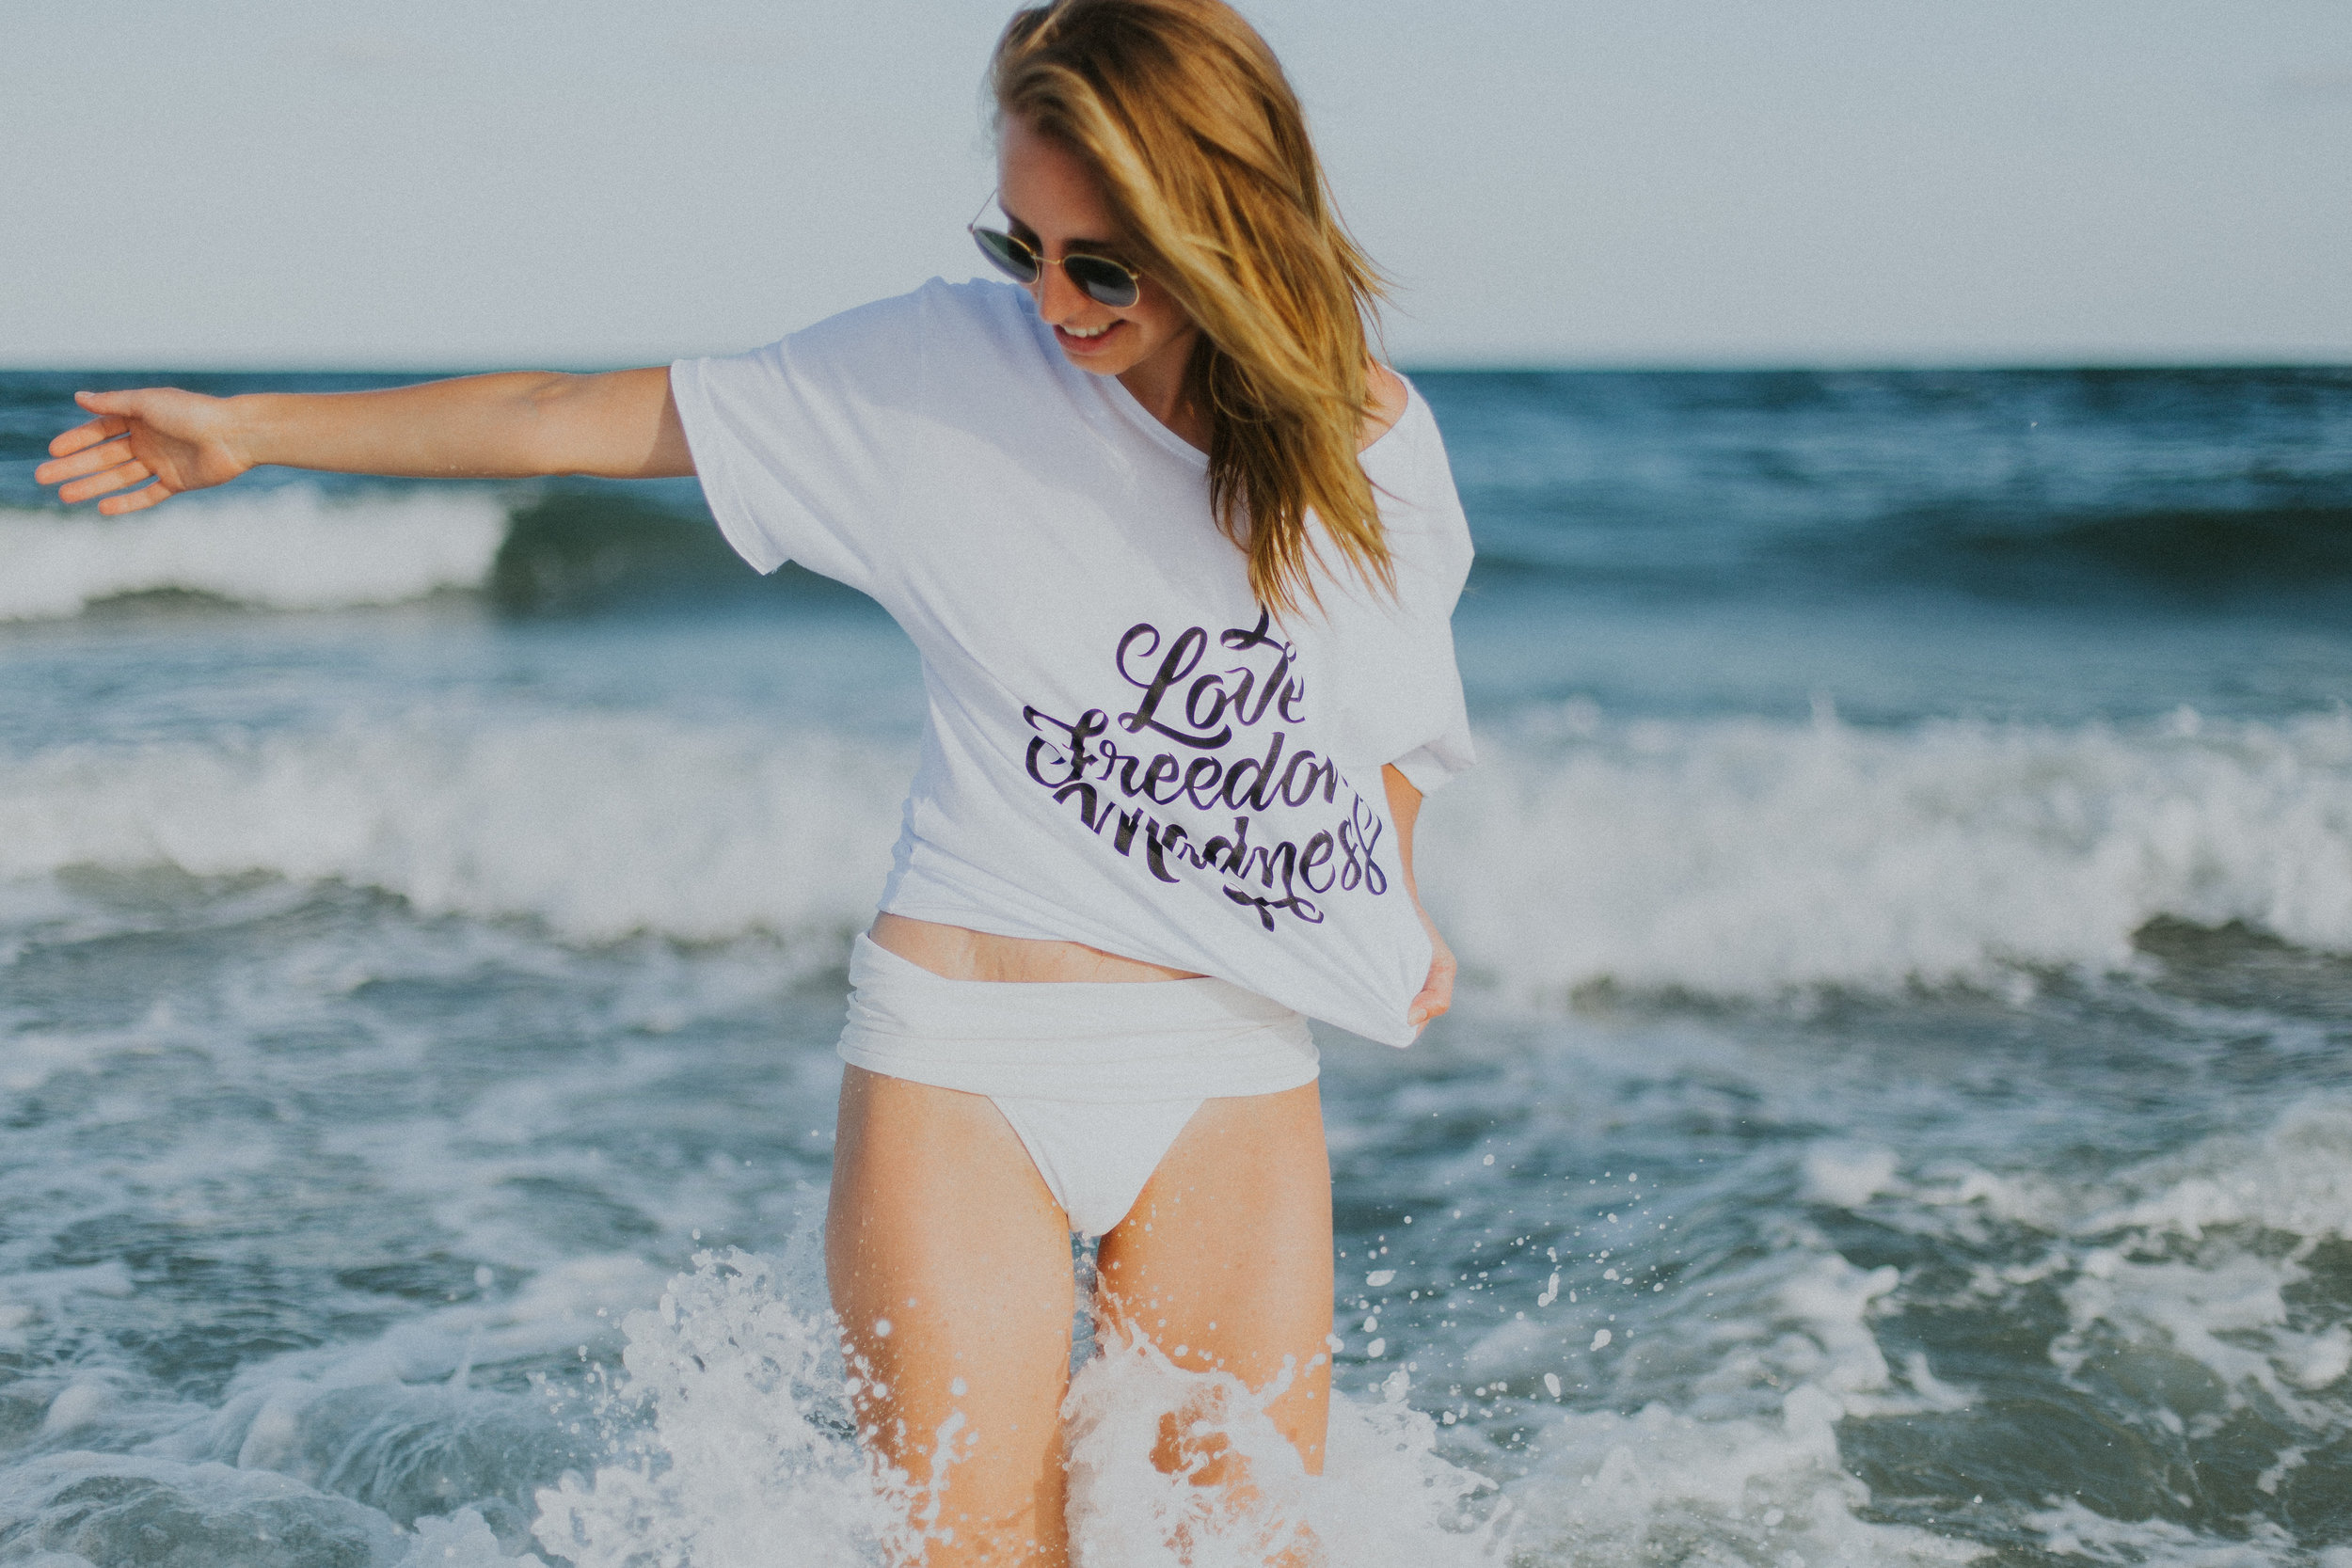 Gaby-Braun-Love-Freedom-Madness-Model-Brazil-t-shirt-beach-praia-ensaio-campanha-fotos-na-praia-ricardo-franzen-5.jpg